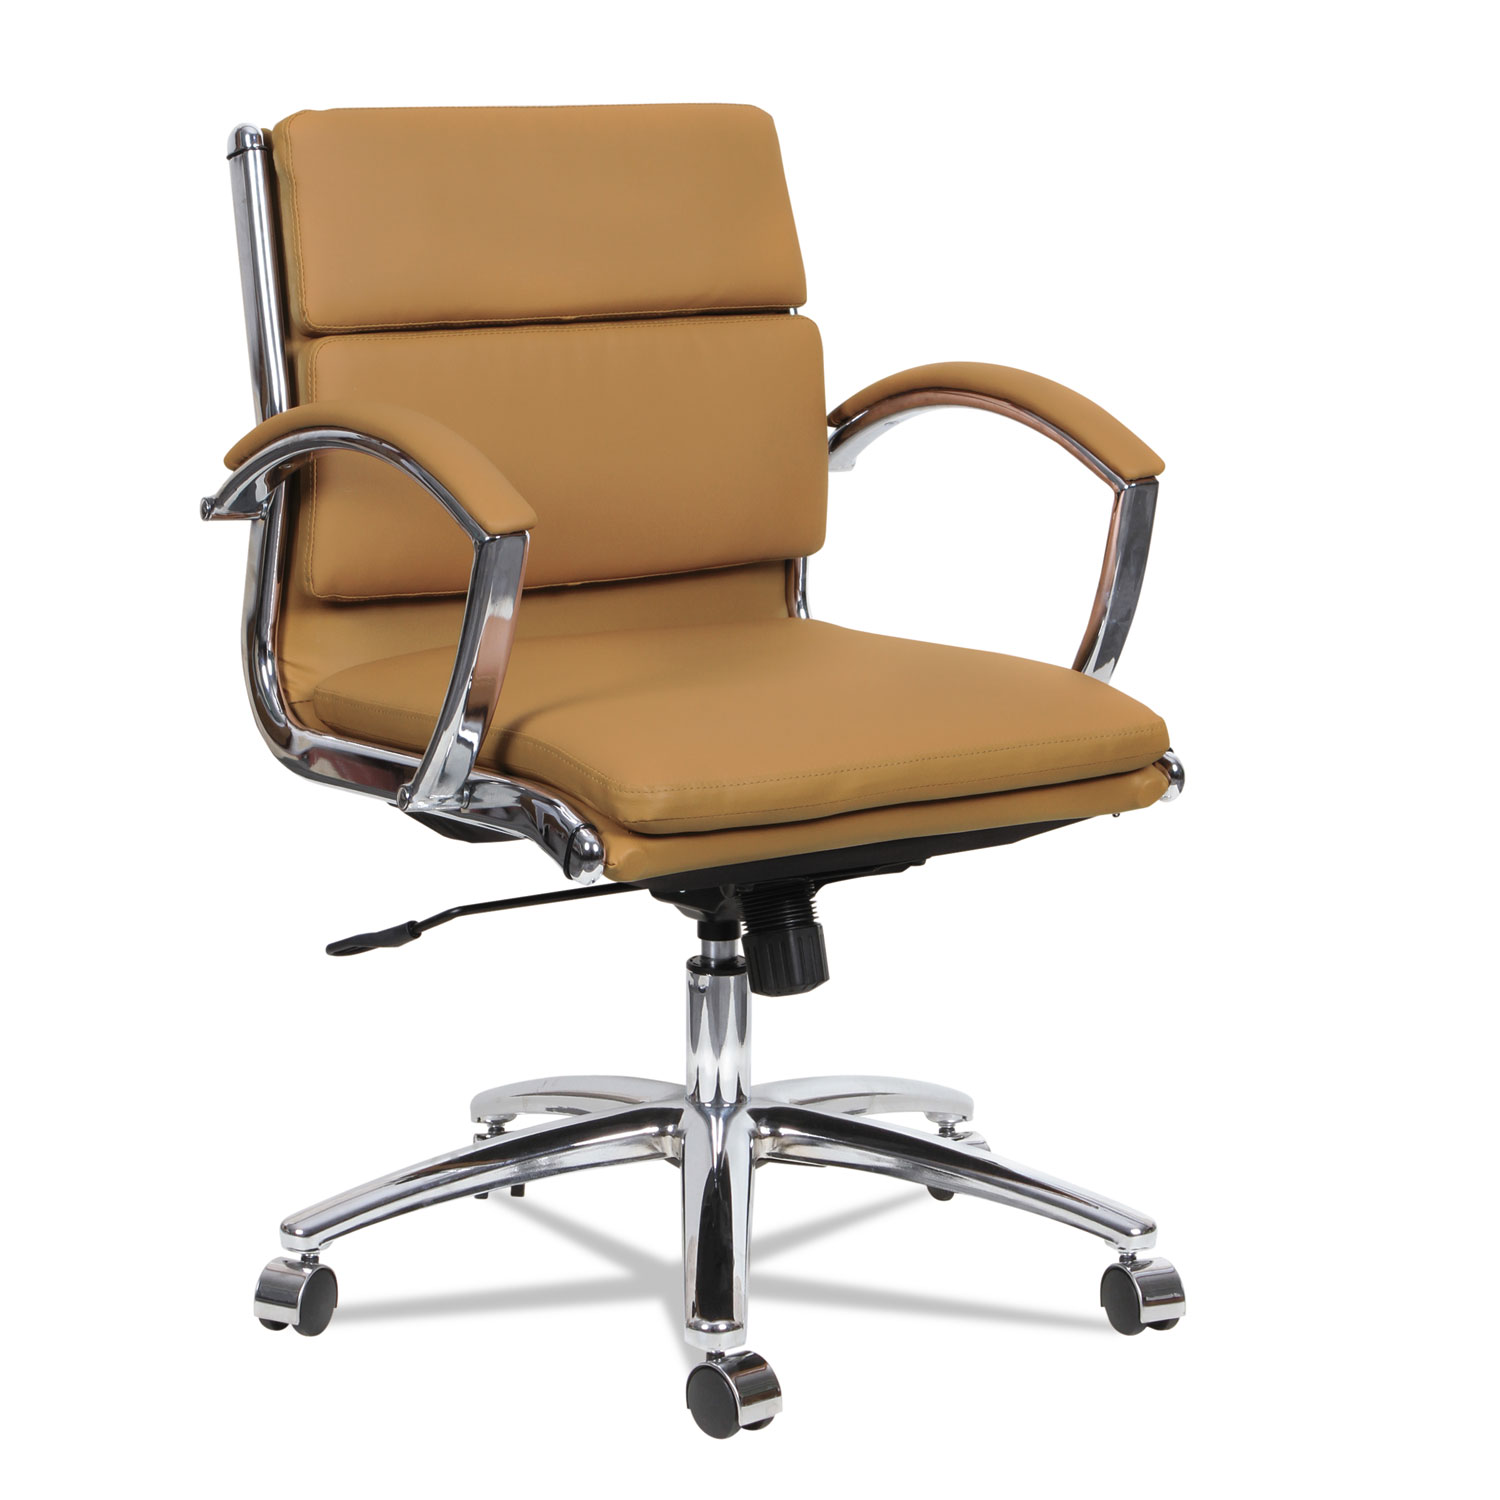  Alera ALENR4759 Alera Neratoli Low-Back Slim Profile Chair, Supports up to 275 lbs., Camel Seat/Camel Back, Chrome Base (ALENR4759) 